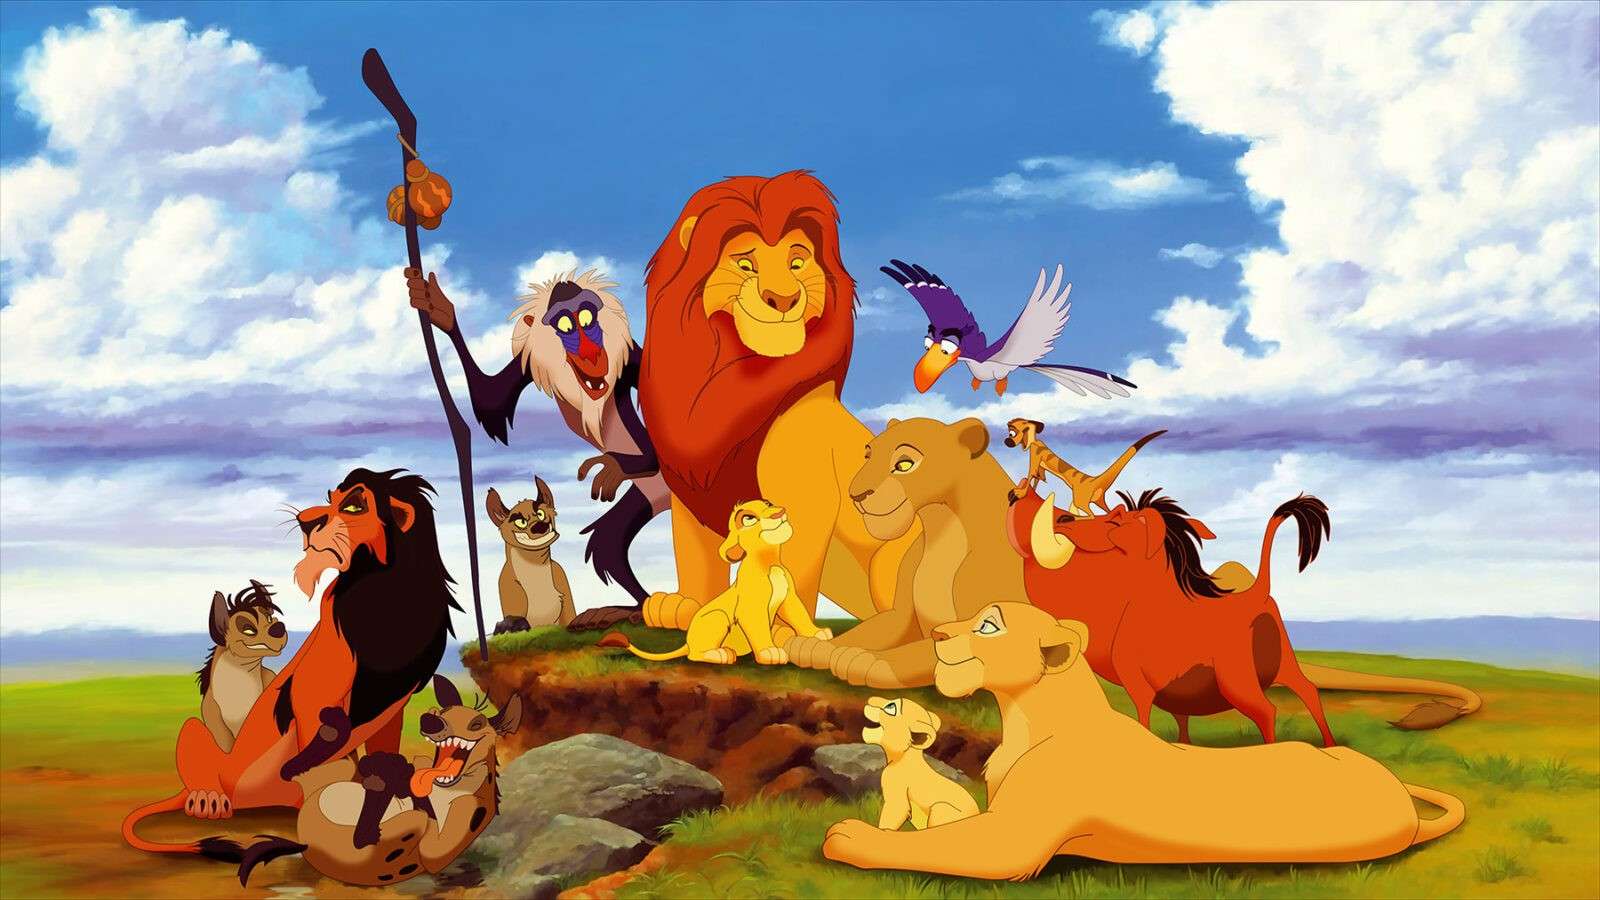 Koning leeuw upende legpuzzel online